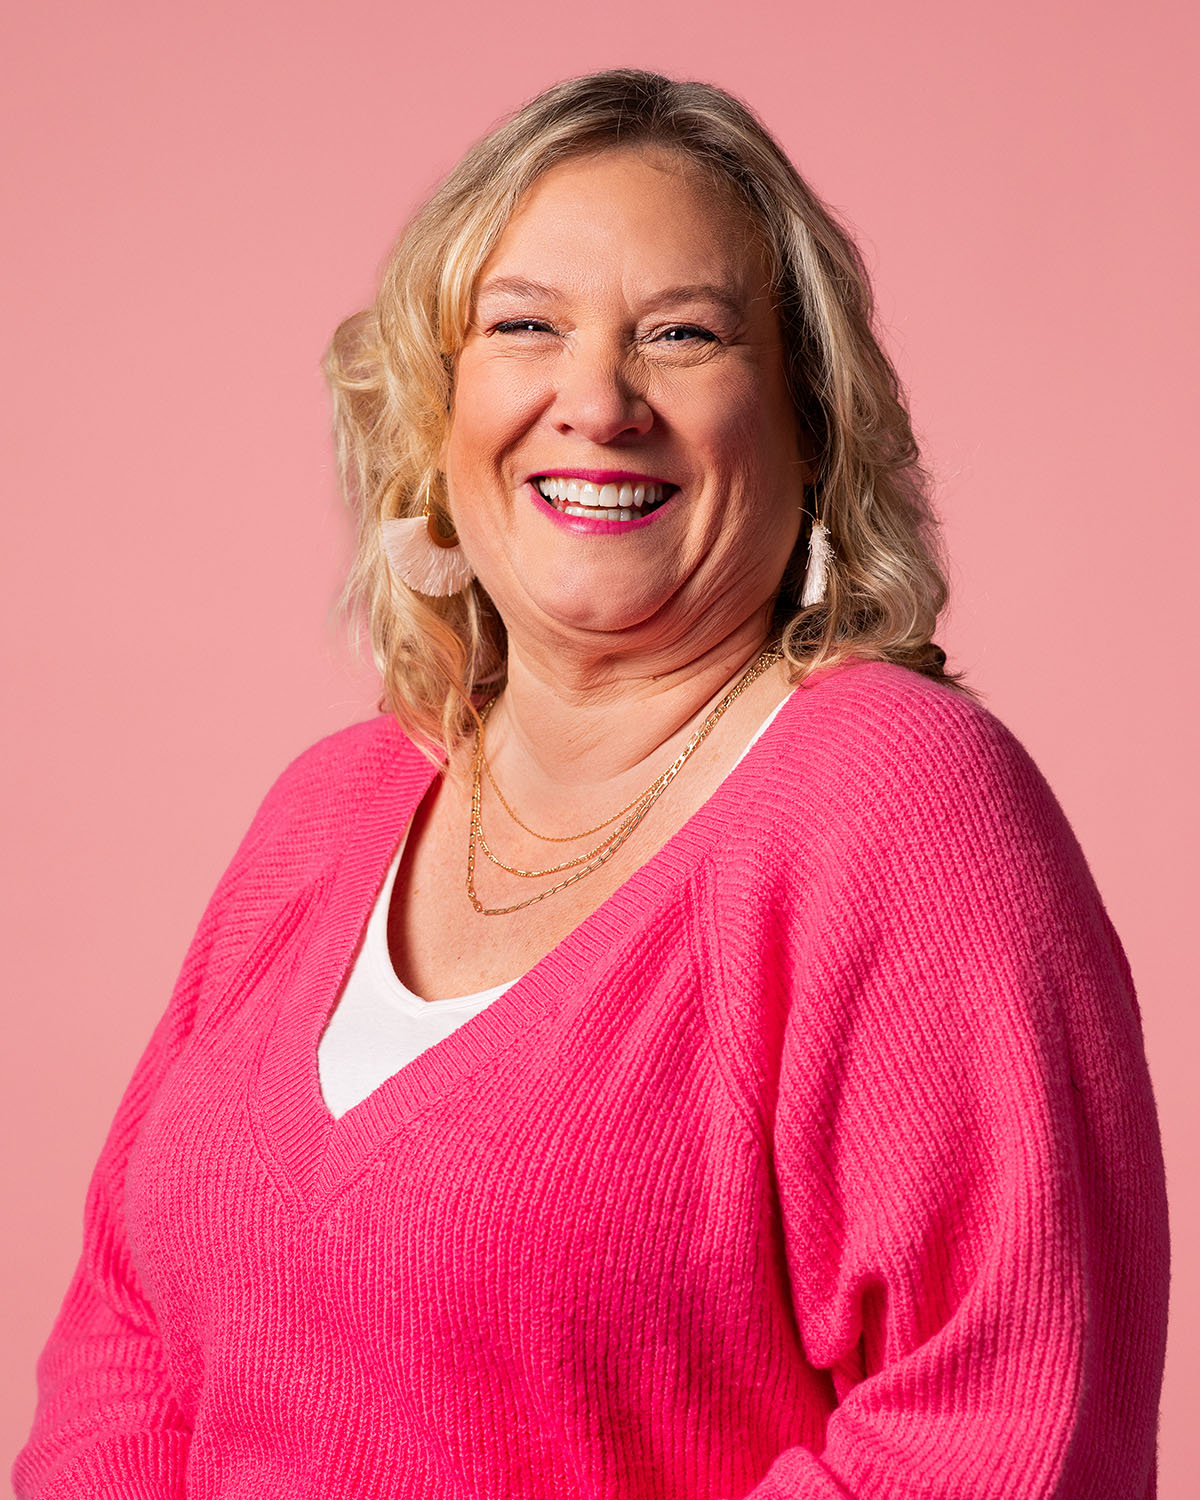 Mary Kinder, Asher Agency Senior Copywriter, laughing wearing bright pink sweater